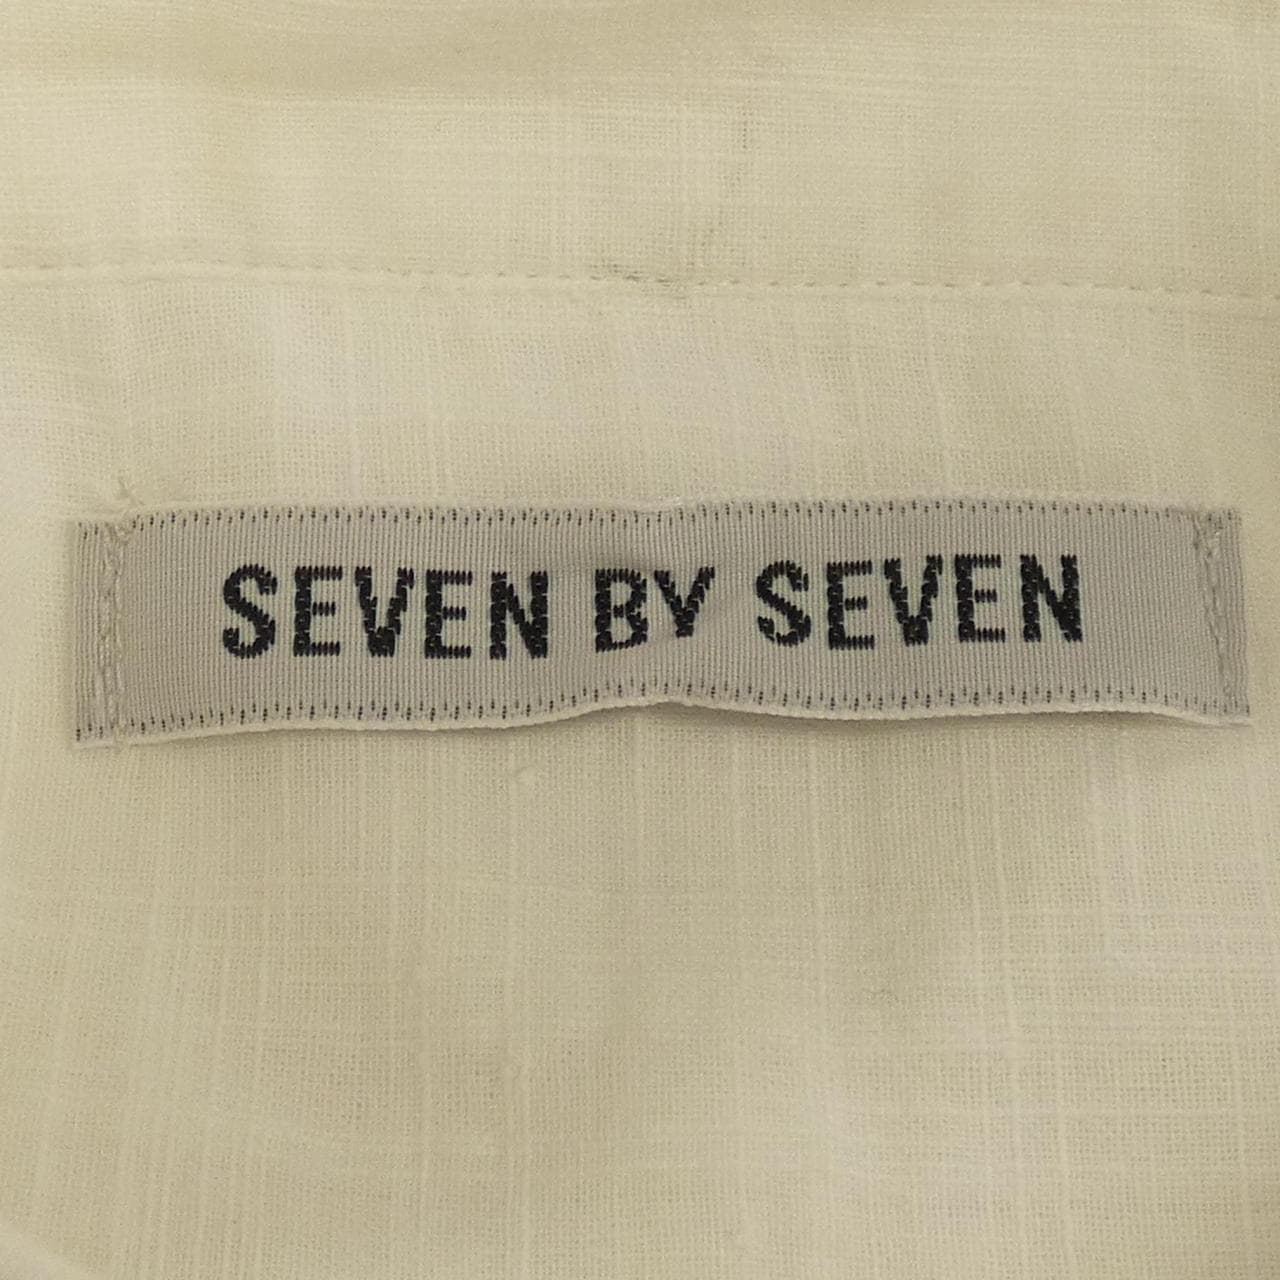 SEVENBYSEVEN S/S shirt